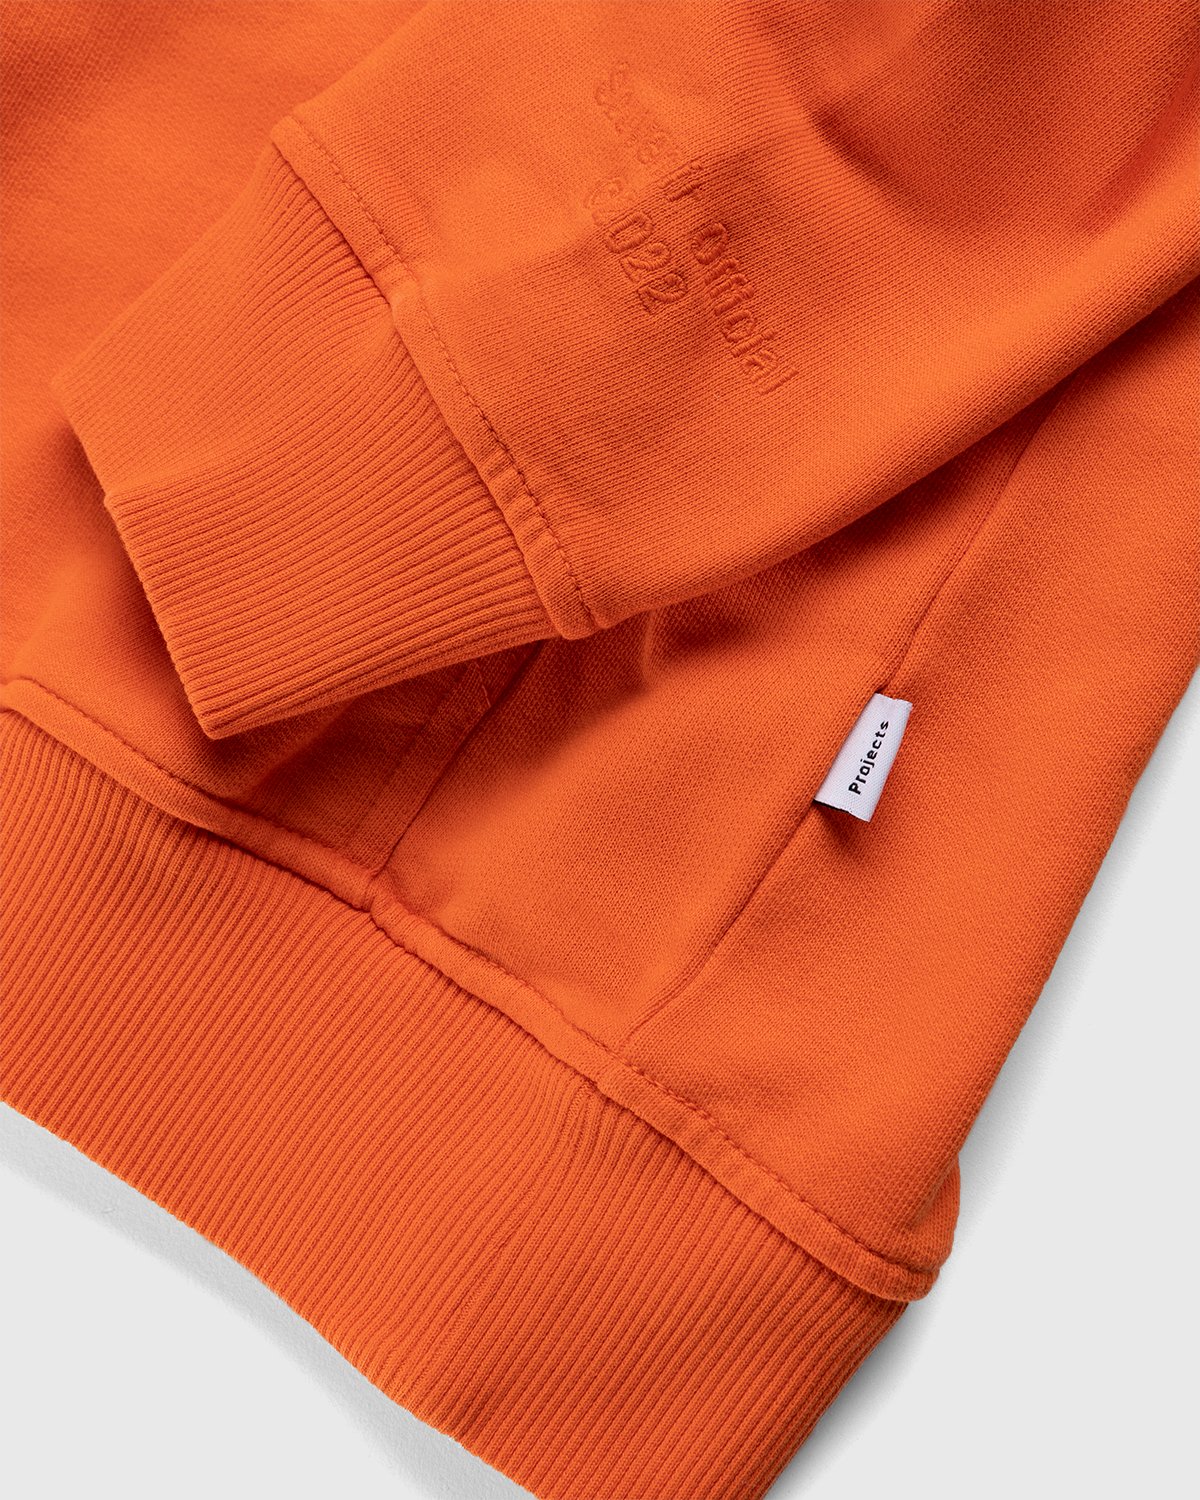 Souvenir - Eunify G-Dye Hoodie Flame - Clothing - Orange - Image 3